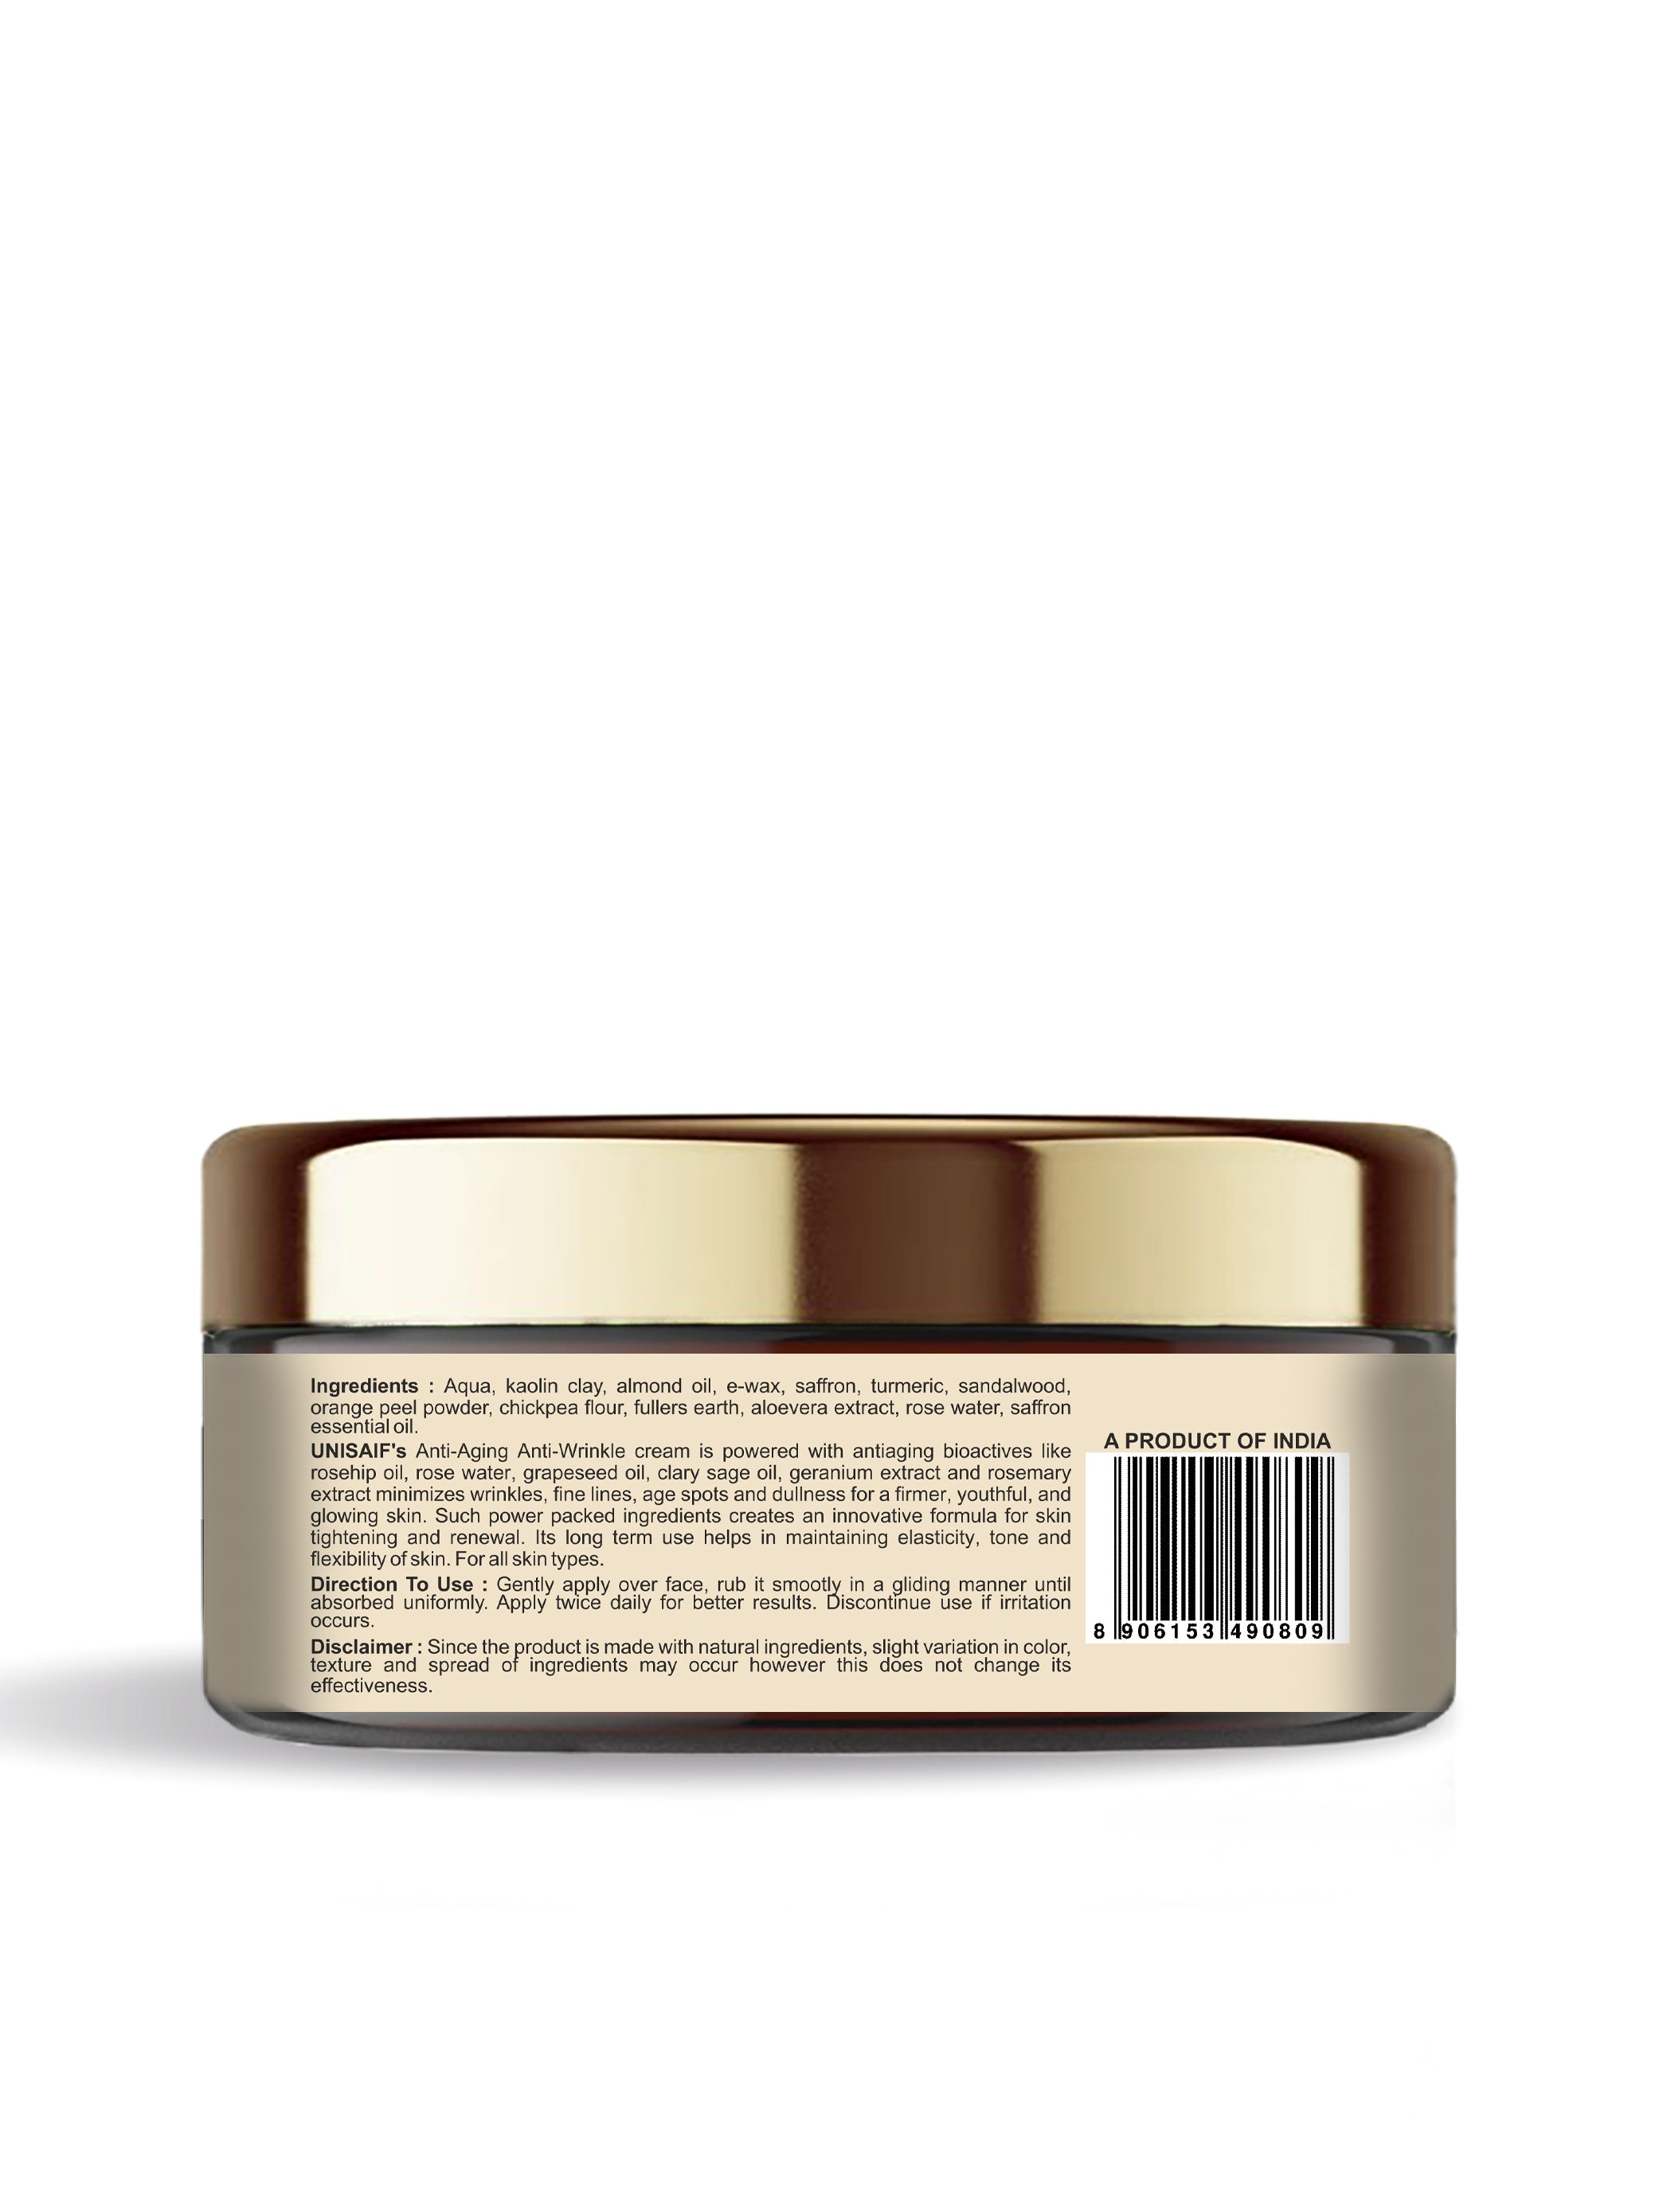 Anti-Aging/Anti-Wrinkle Organic Night Cream (50g) With Rosemary Extract | Wrinkle & Fine Line Reduction| Damage Repair| Skin Renewal